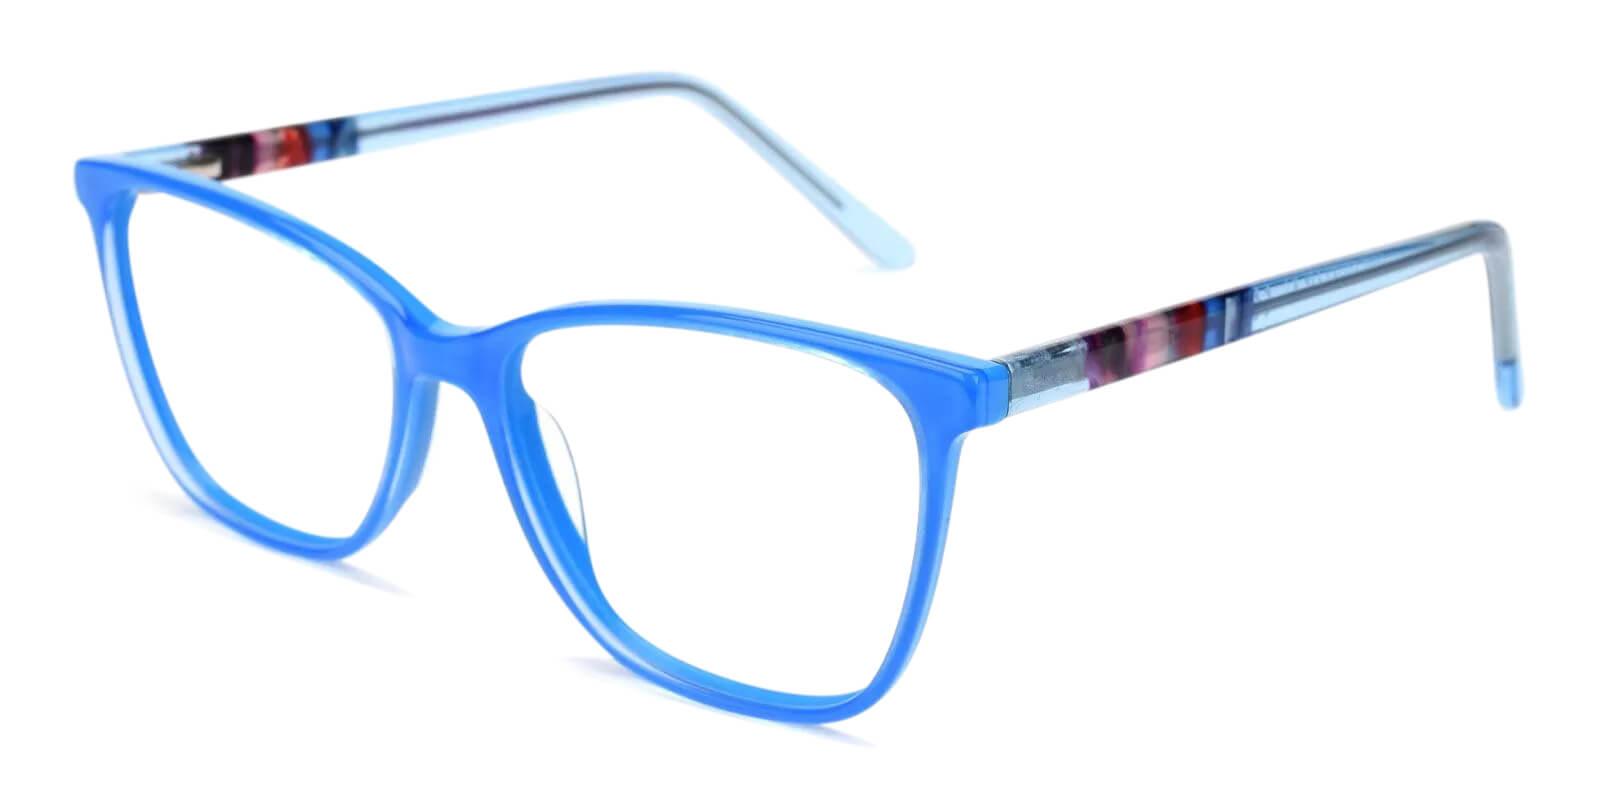 Mitchell Blue Acetate Eyeglasses , Fashion , SpringHinges , UniversalBridgeFit Frames from ABBE Glasses